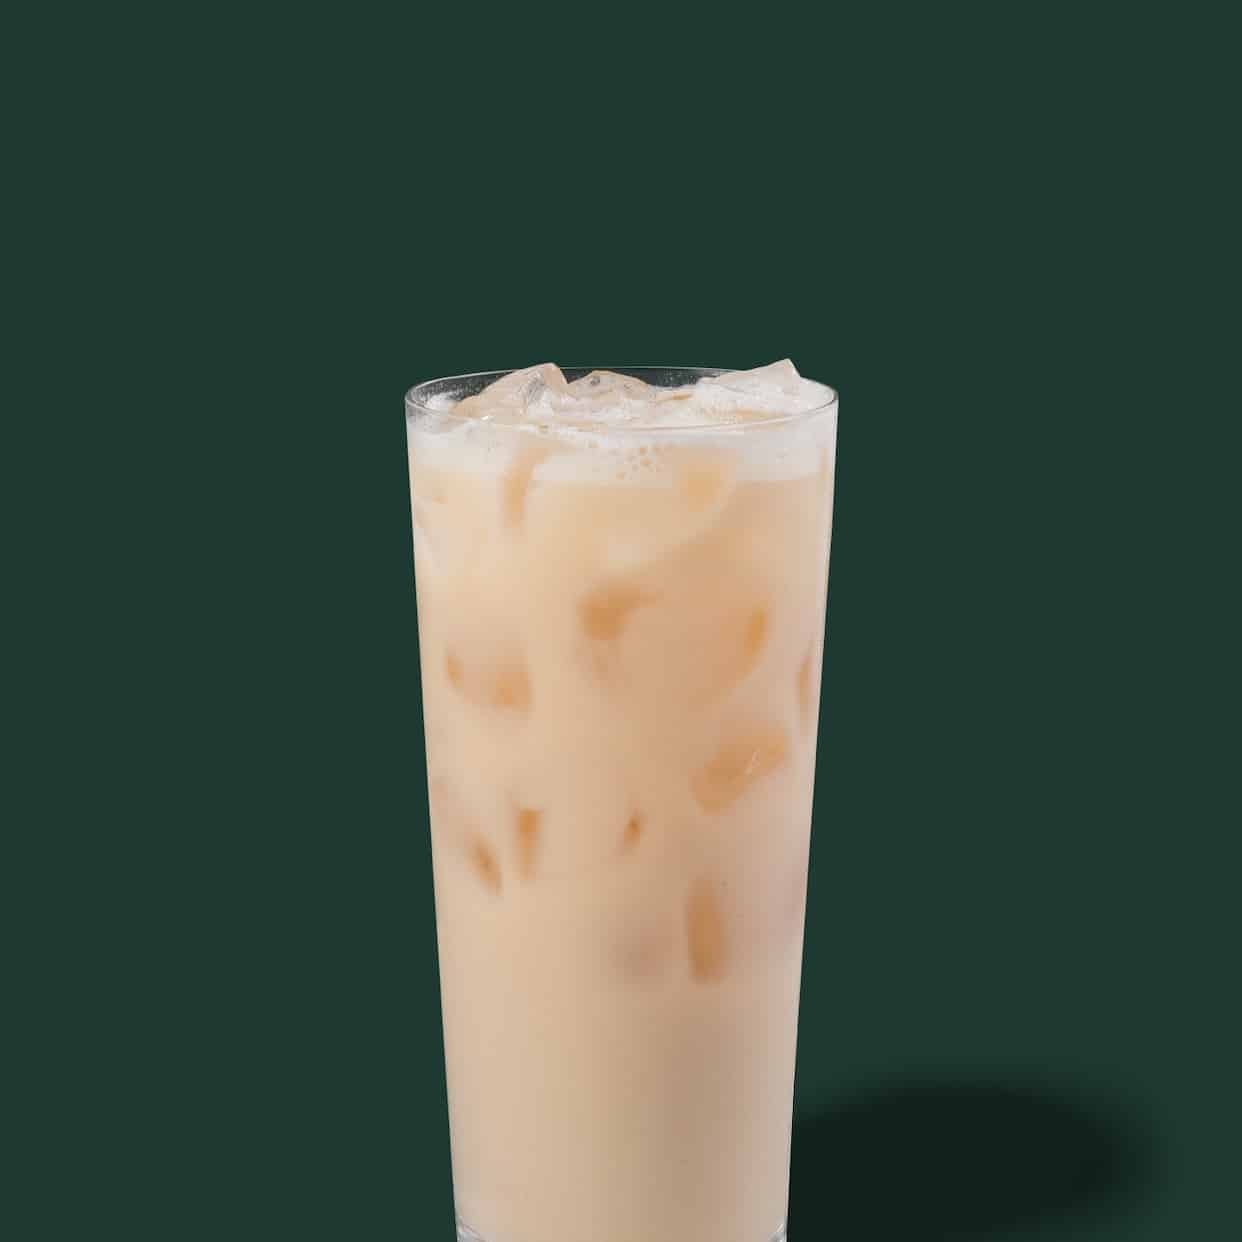 Grande Iced Vanilla Latte Starbucks Price